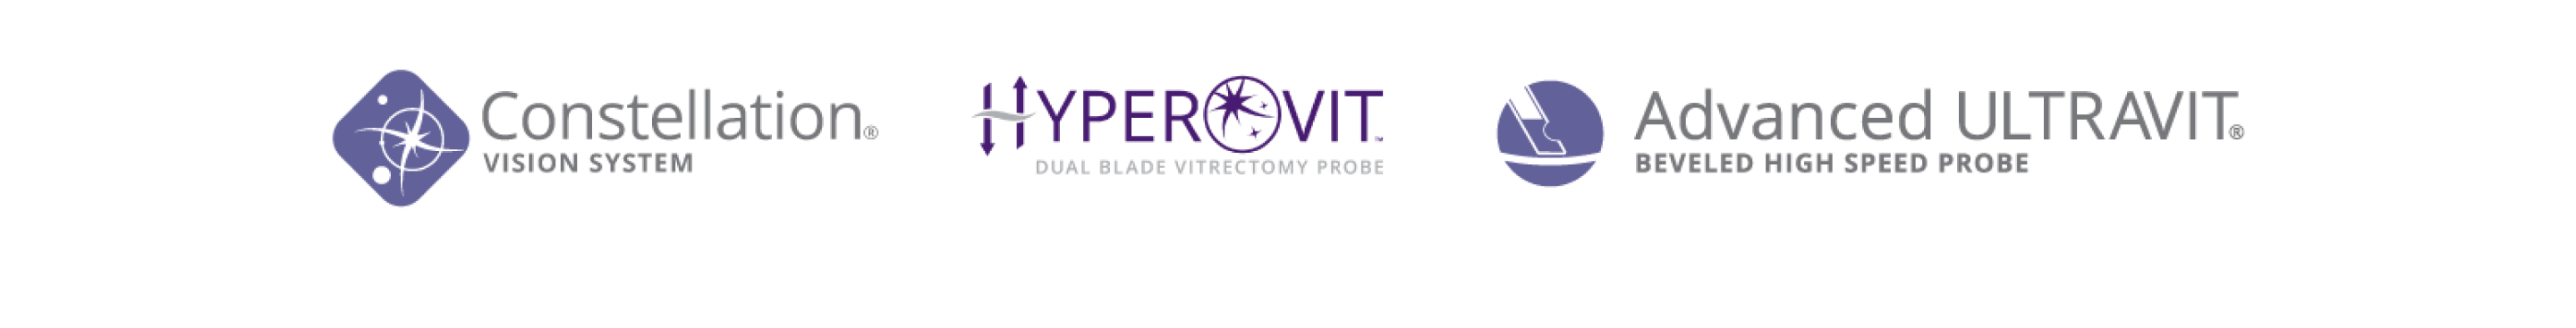 Constellation Vision System, Hypervit Dual Blade. Vitrectomy Probe, Advanced Ultravit Beveled High Speed Probe logos.